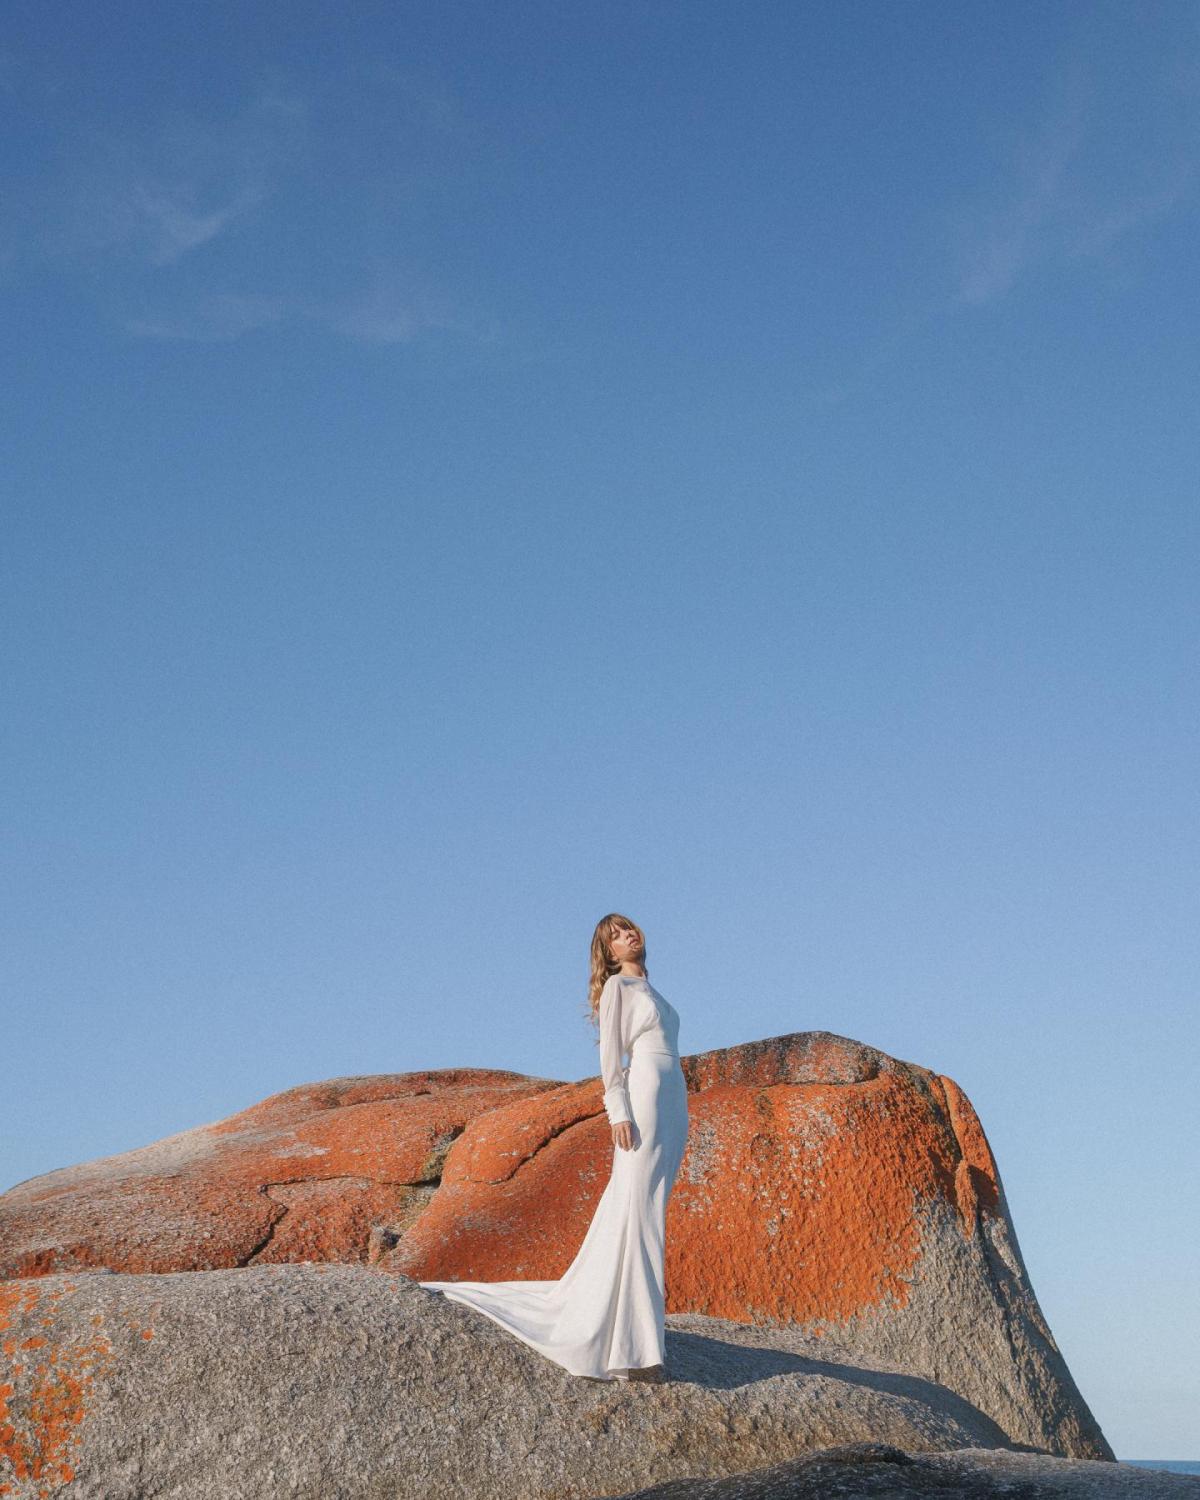 Brie, an elegant wedding dress with sheer long sleeves by Karen Willis Holmes on Byron bay model Christina Macpherson